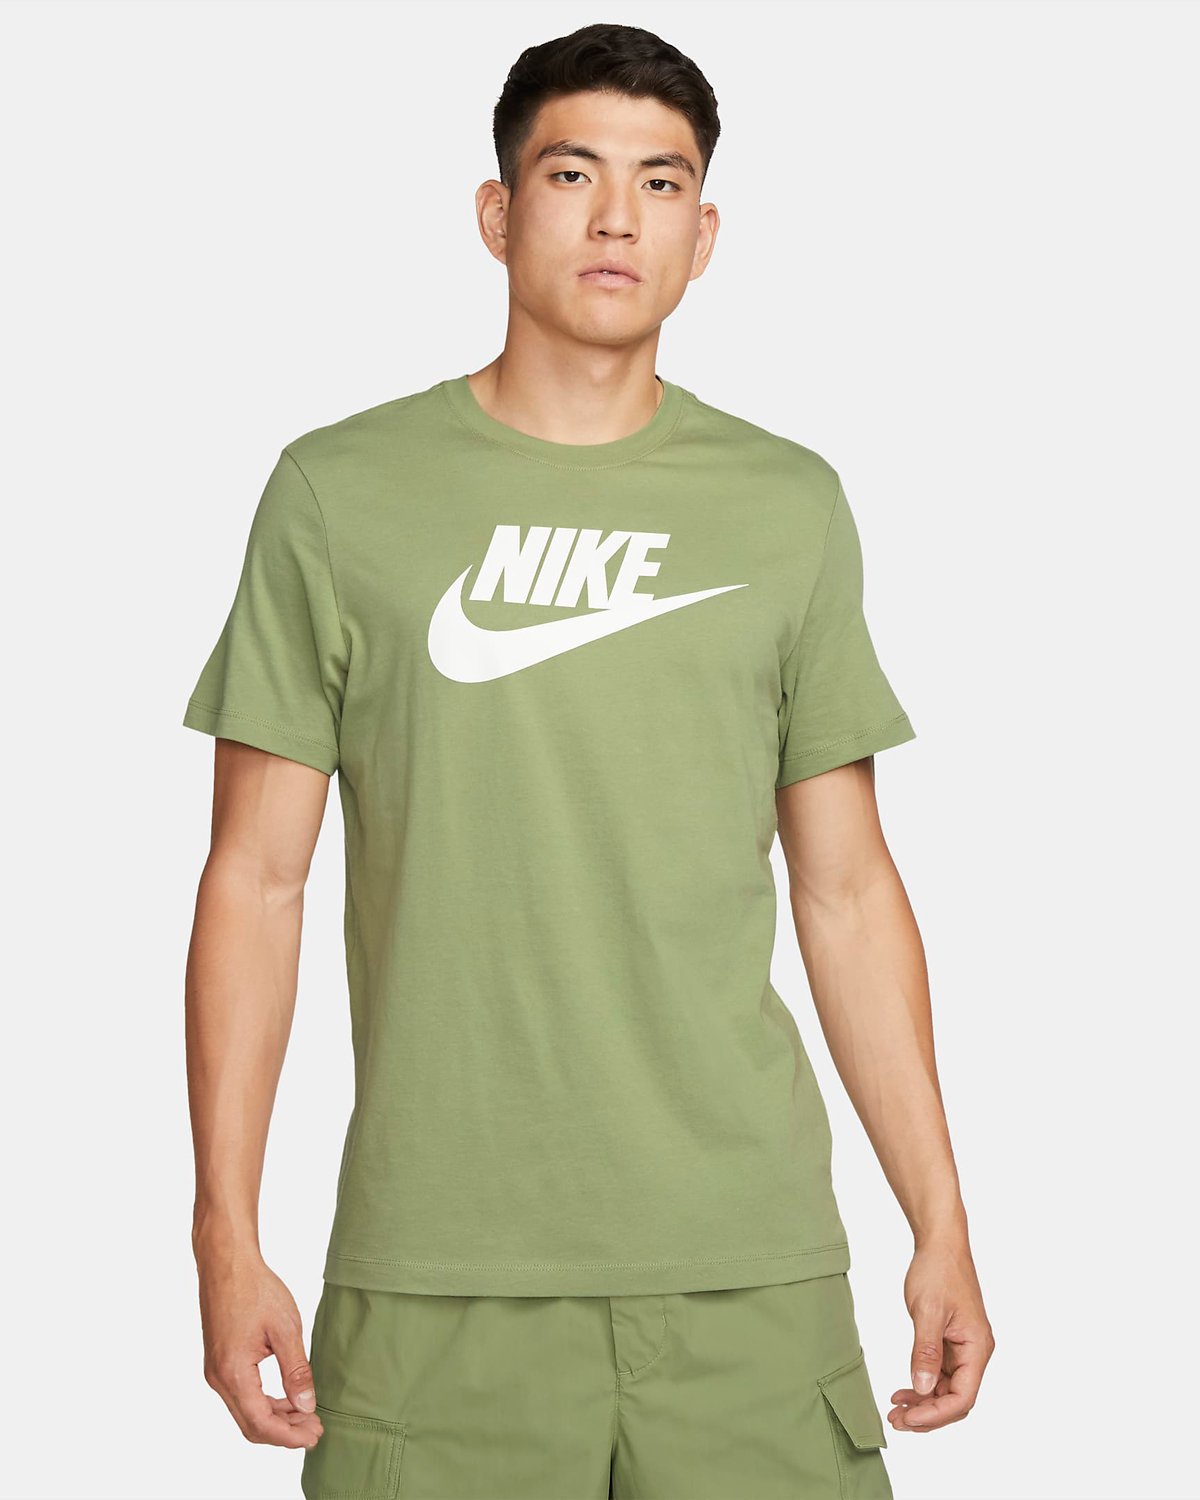 Nike-Sportswear-T-Shirt-Alligator-Green